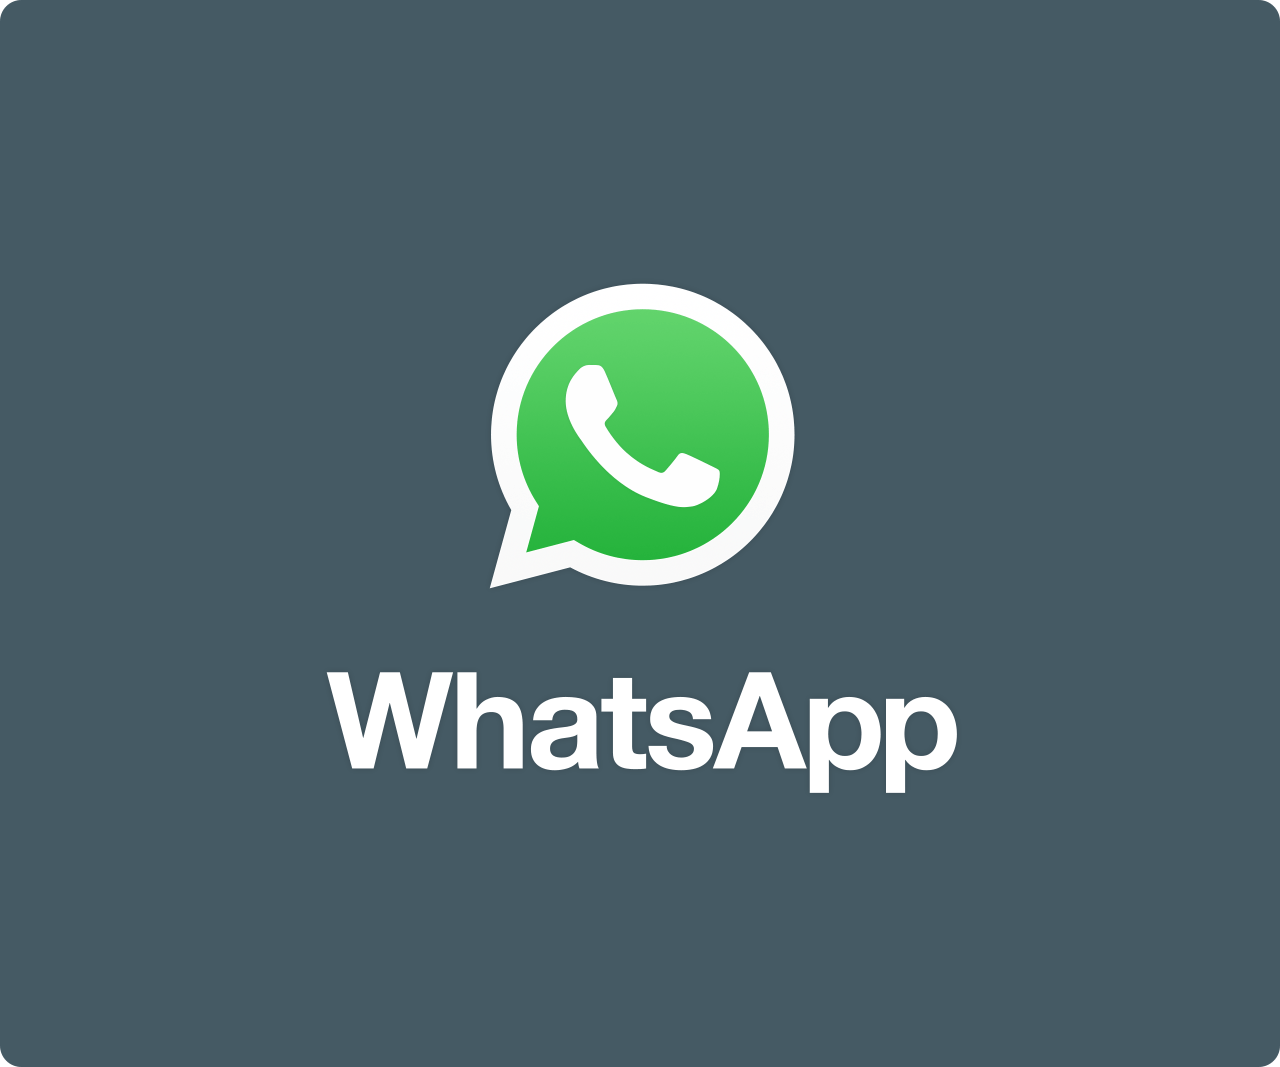 Green U Bull Logo - WhatsApp Brand Resources